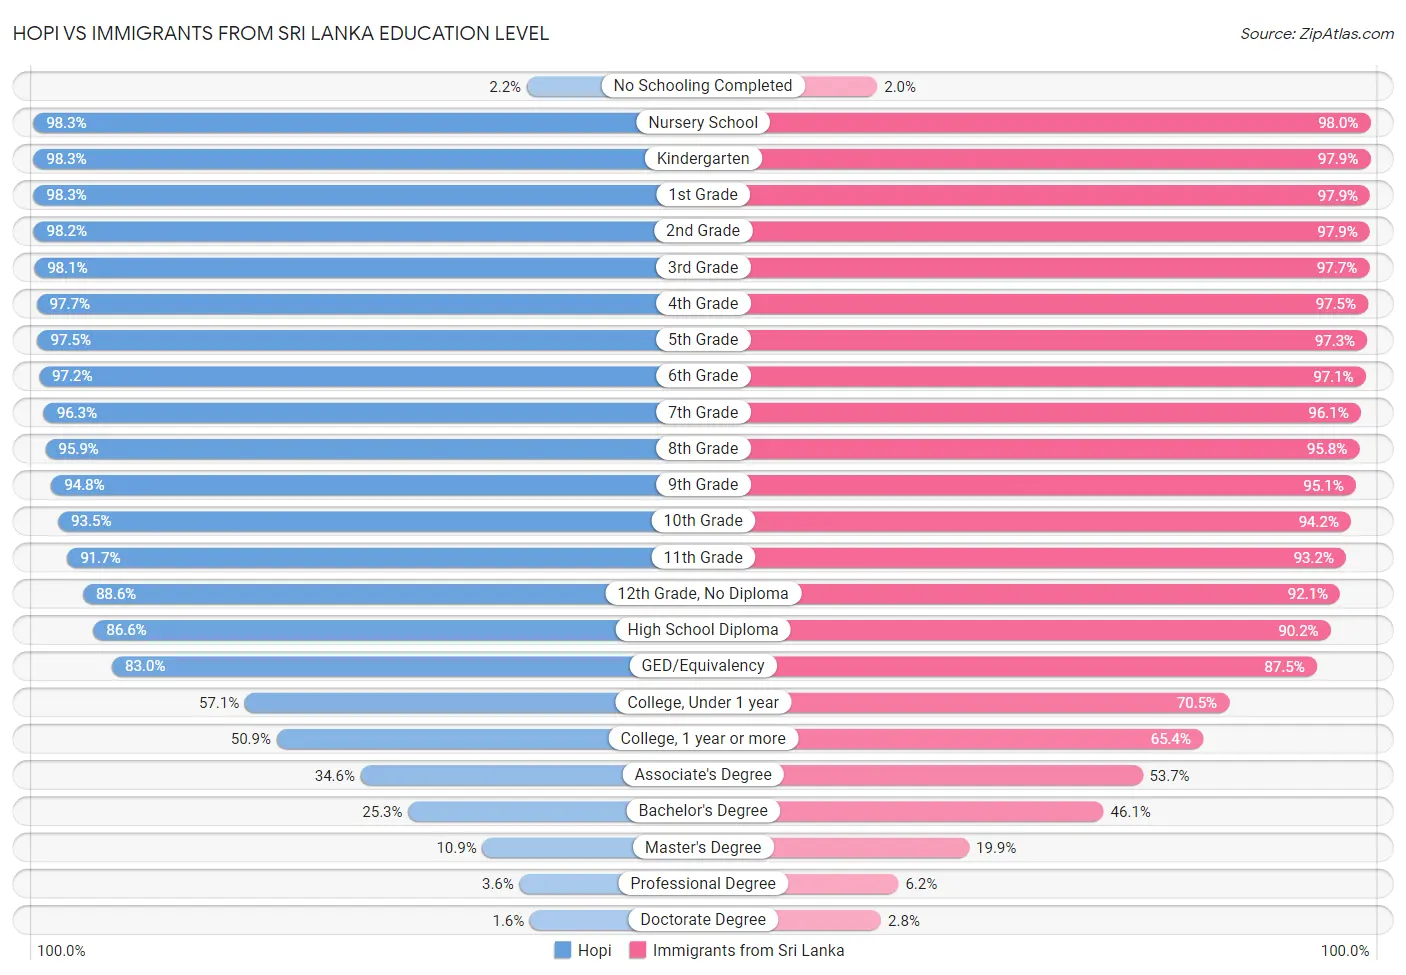 Hopi vs Immigrants from Sri Lanka Education Level